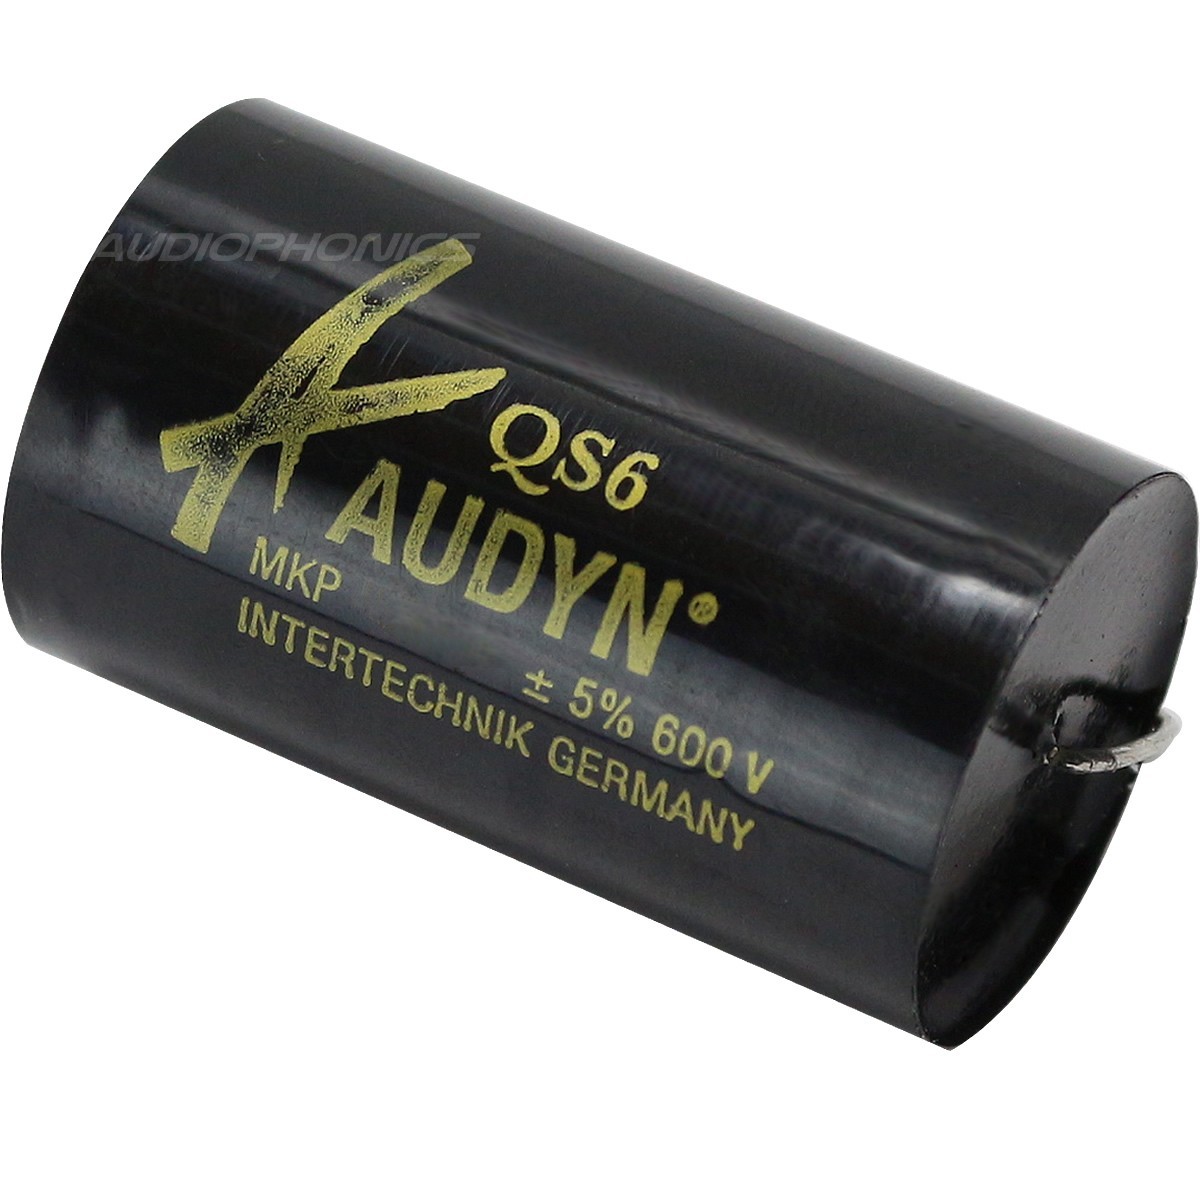 AUDYN CAP QS6 MKP Capacitor 600V 0.47μF